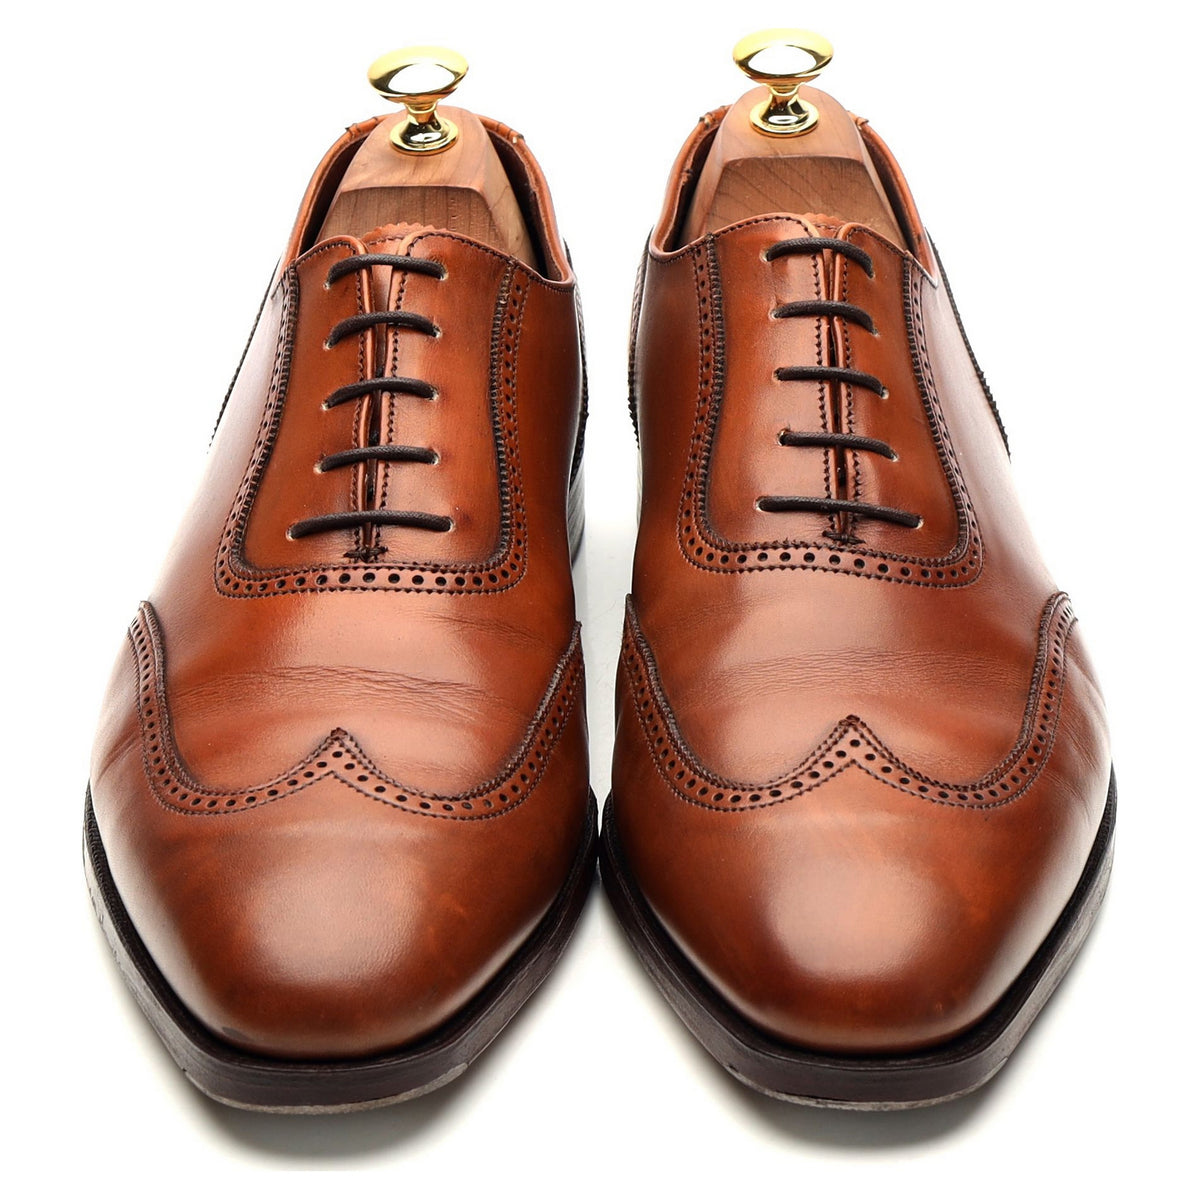 Tan Brown Leather Oxford Brogues UK 10 E